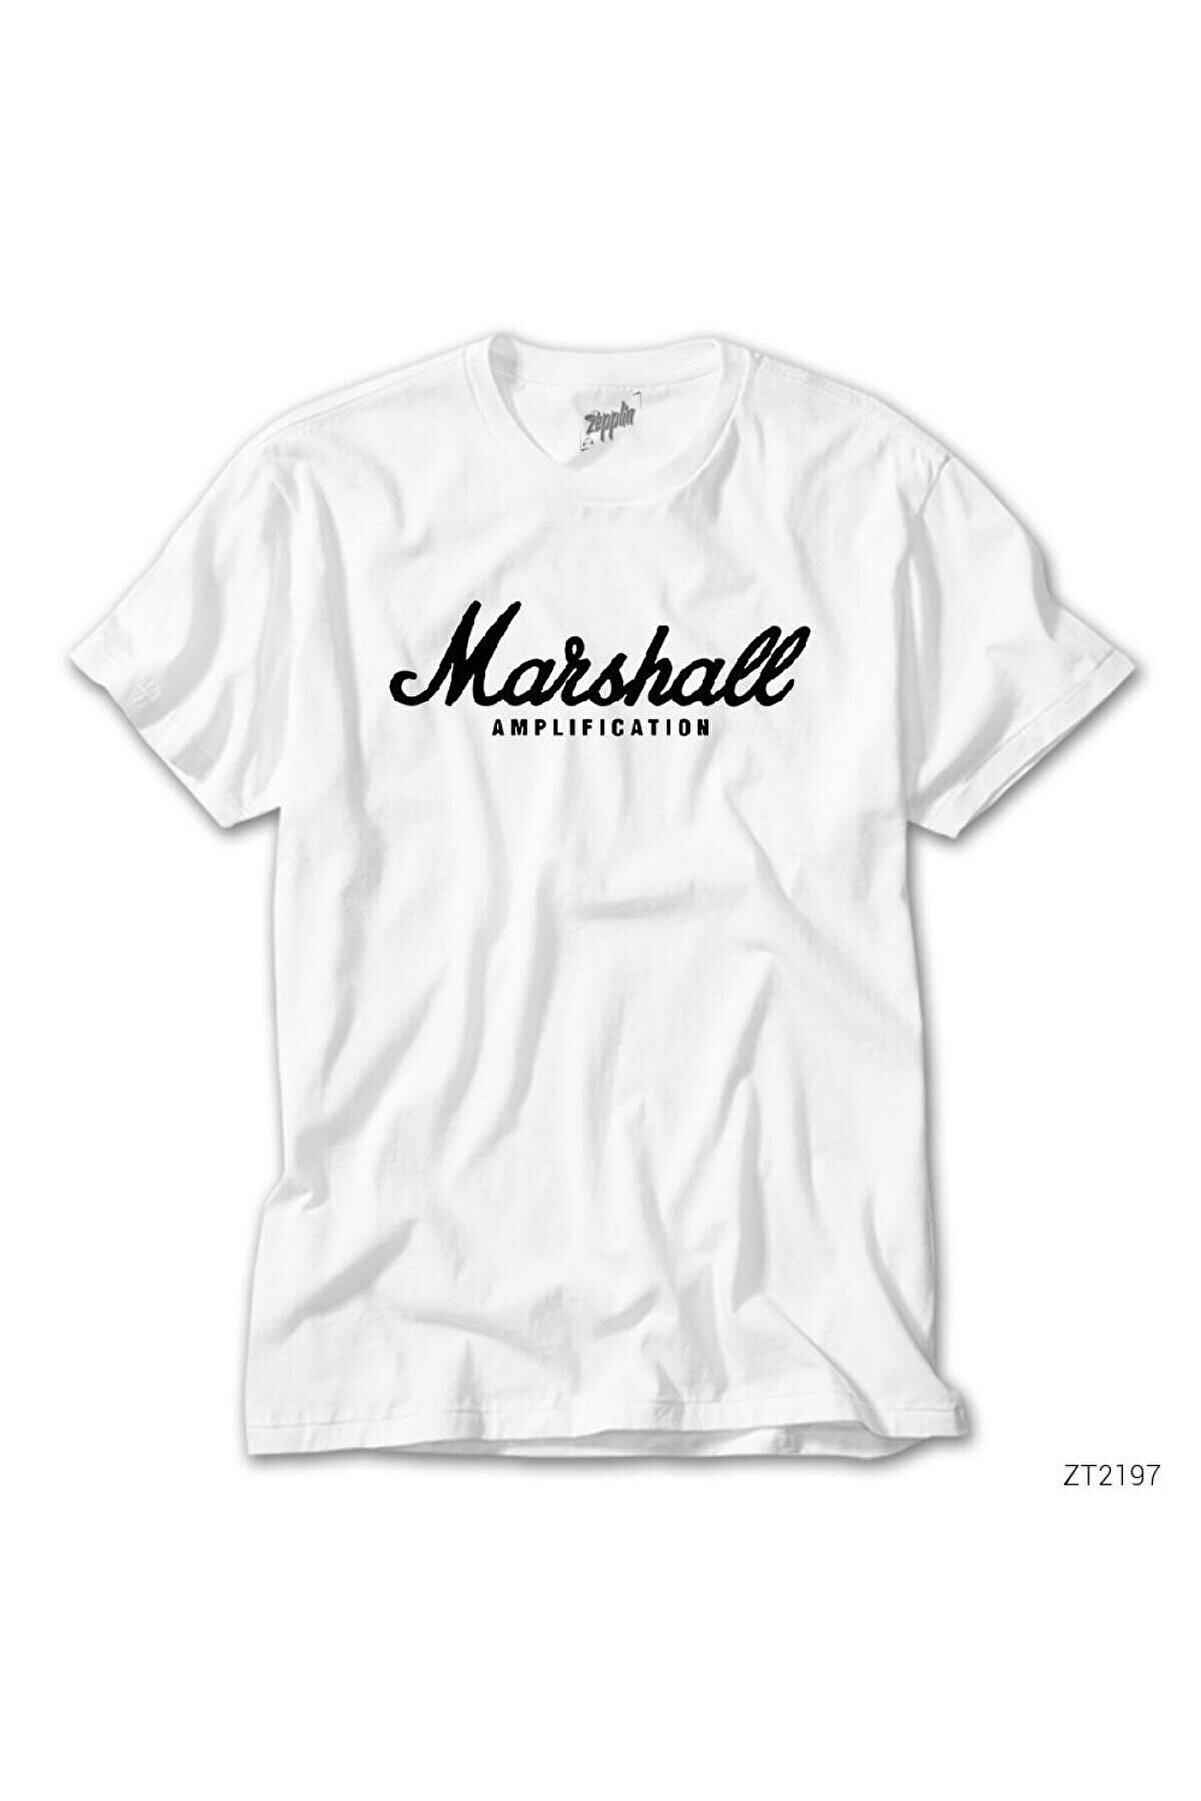 Z zepplin Marshall Logo - 2 Beyaz Tişört